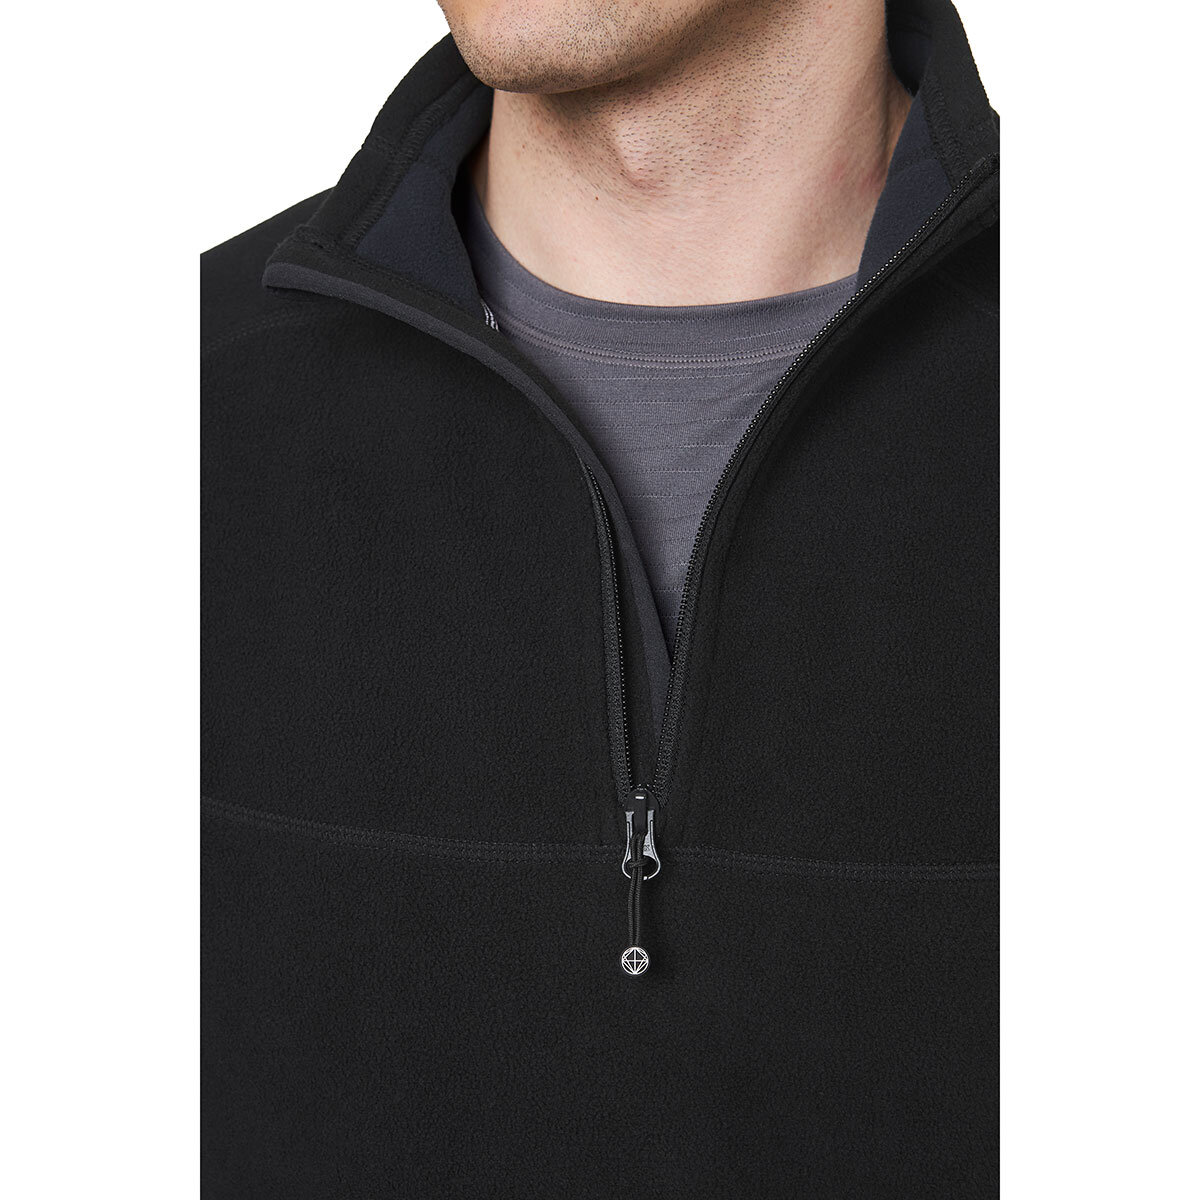 Mondetta Mens Quarter Zip Pullover in Black, Medium | Cos